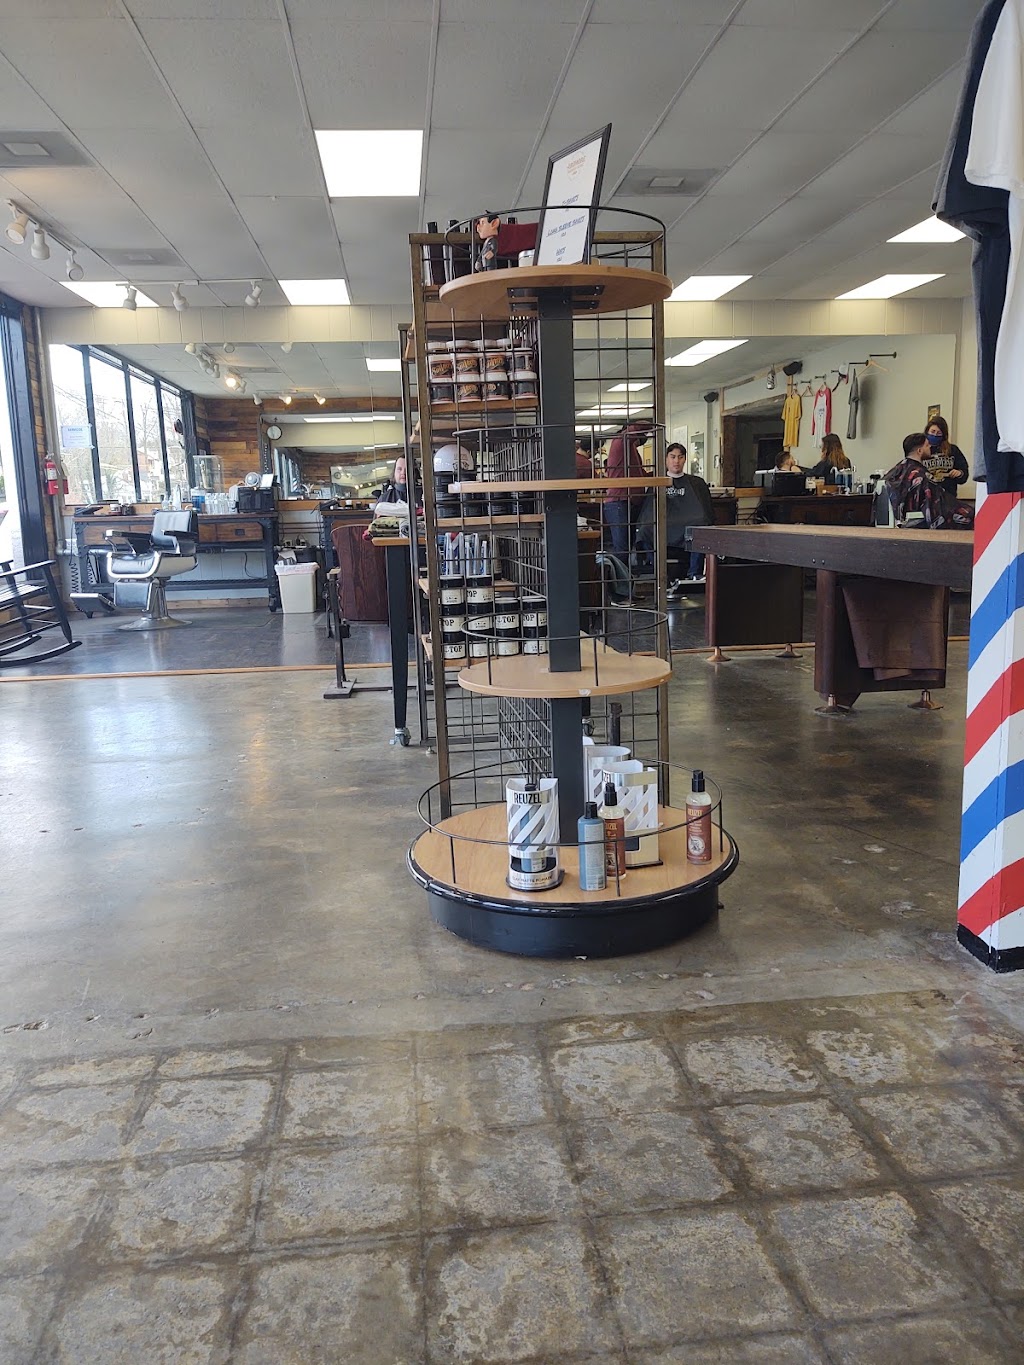 Ardmore Barber Shop | 1311 S Hawthorne Rd, Winston-Salem, NC 27103, USA | Phone: (336) 725-3279